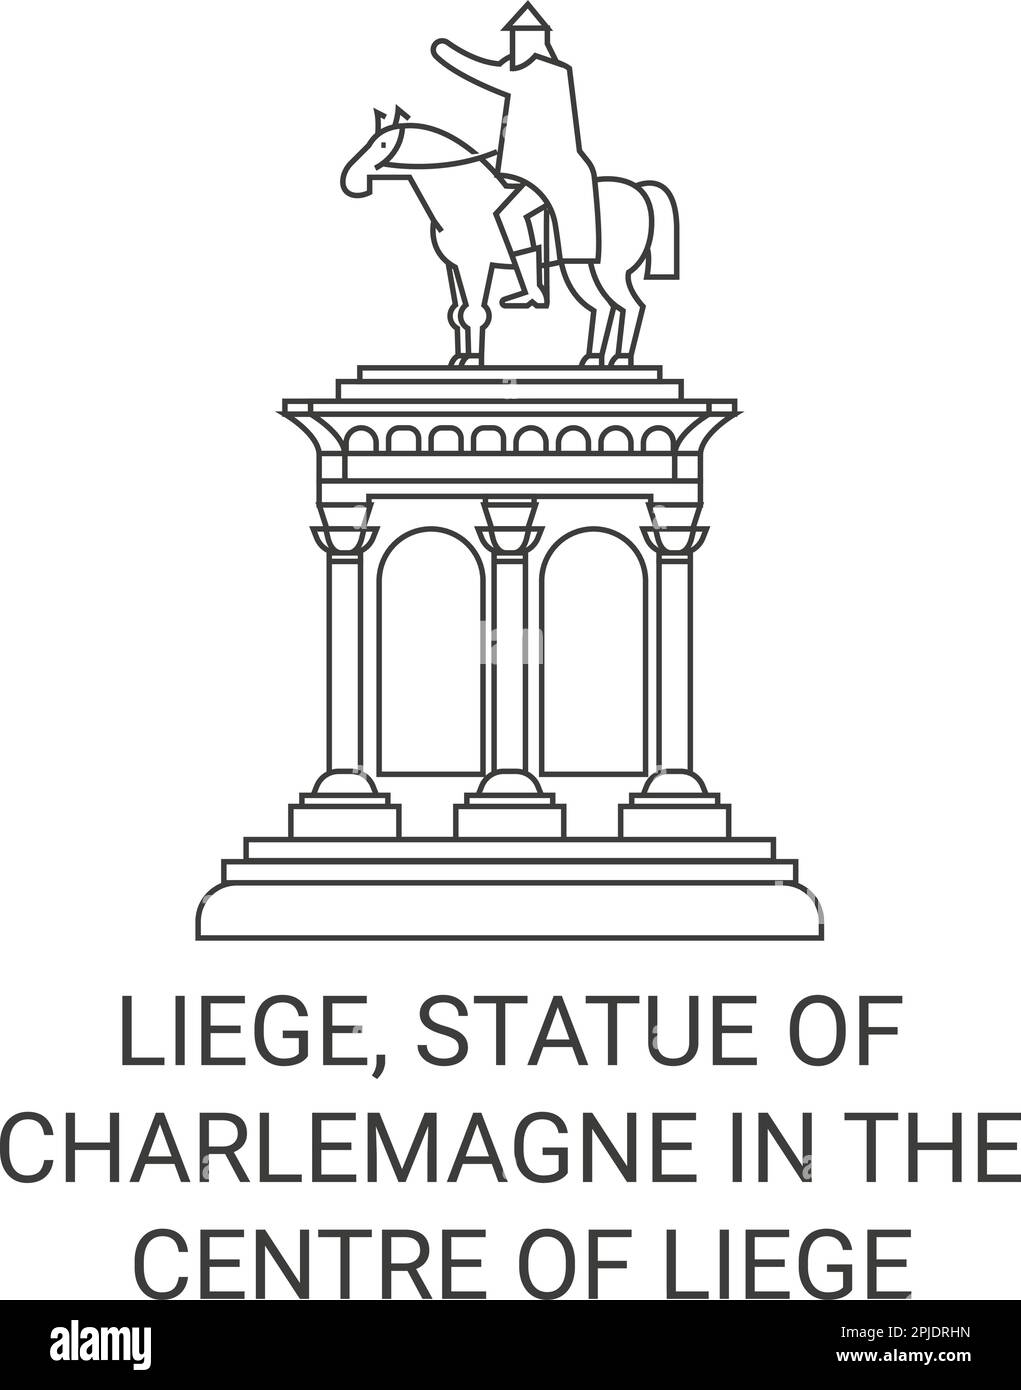 Belgium, Liege, Statue Of Charlemagne In The Centre Of Lige travel landmark vector illustration Stock Vector